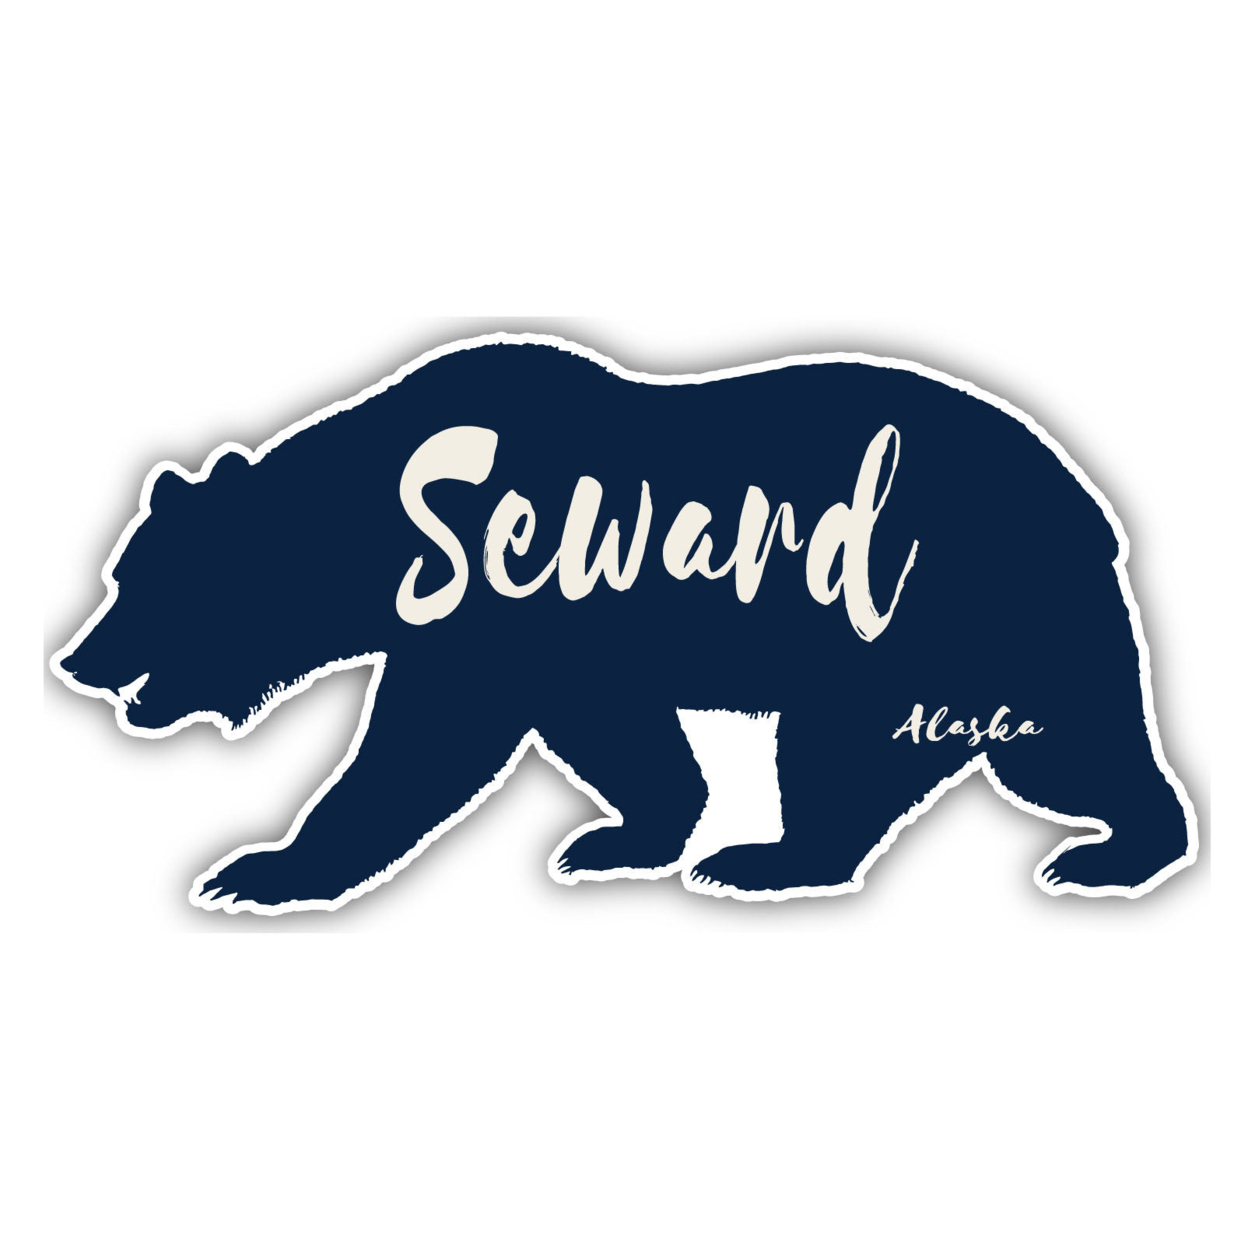 Seward Alaska Souvenir Decorative Stickers (Choose Theme And Size) - Single Unit, 2-Inch, Bear